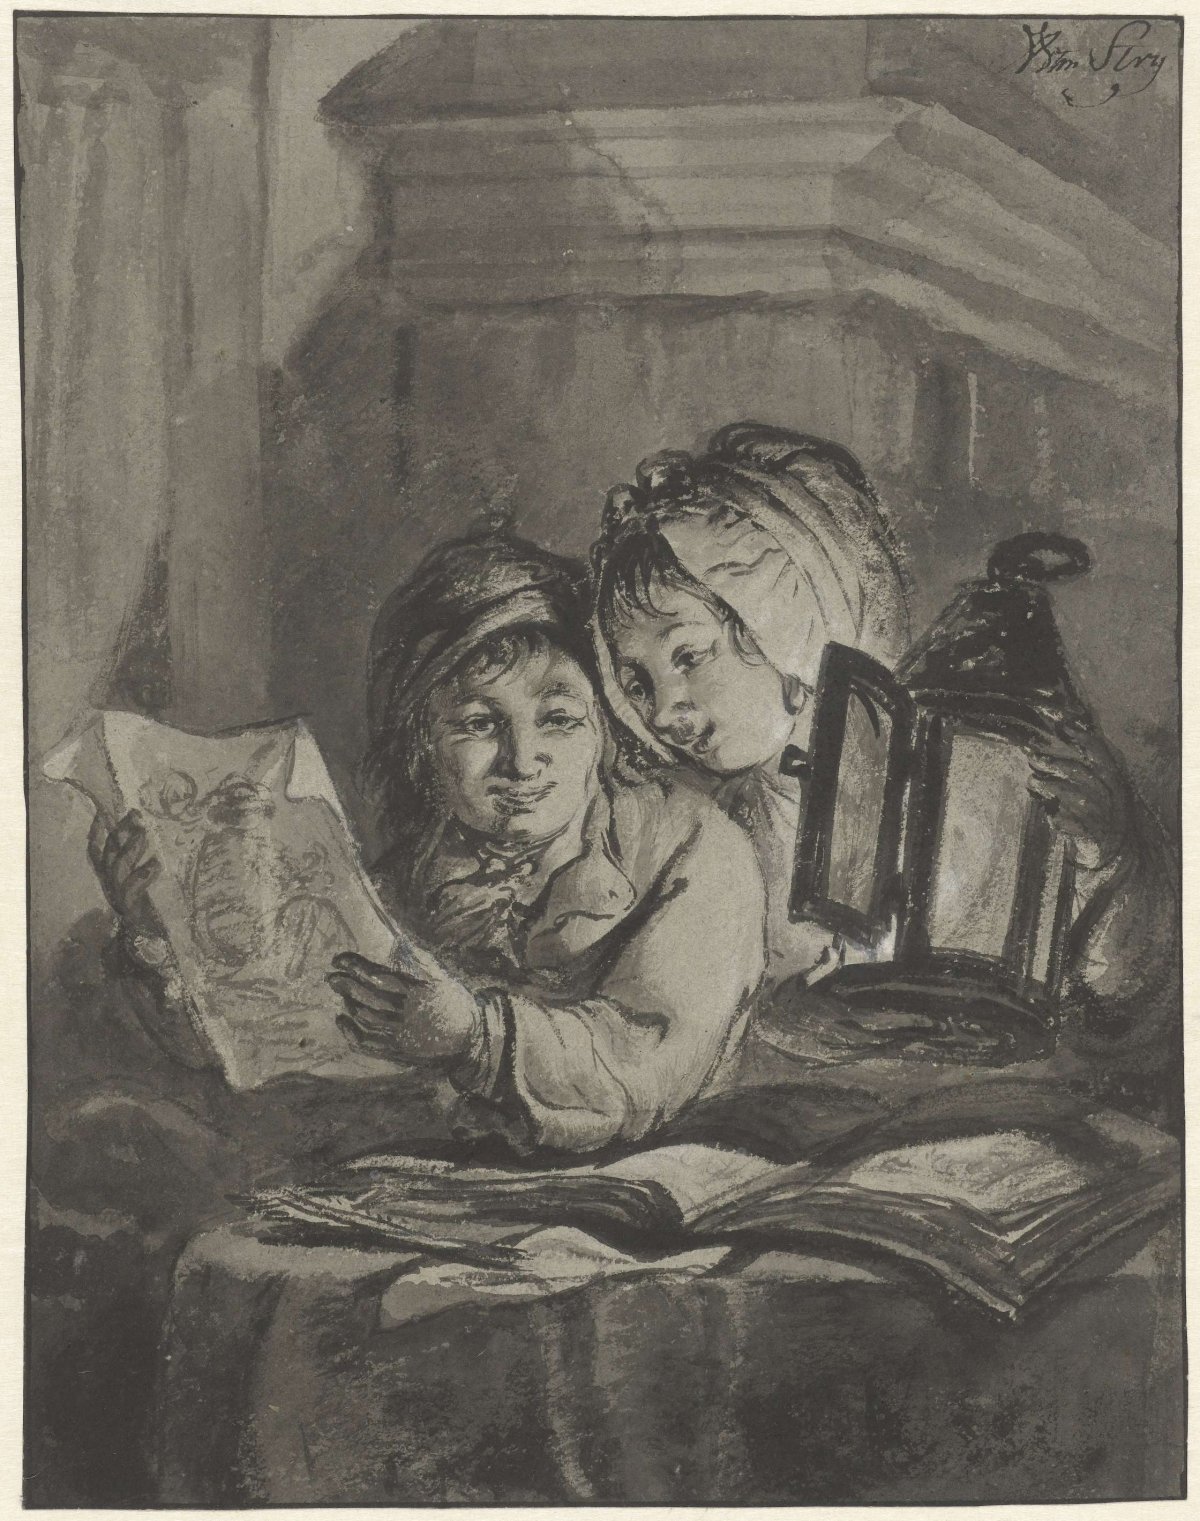 Two reading children with a lantern, Abraham van Strij (I), 1763 - 1826